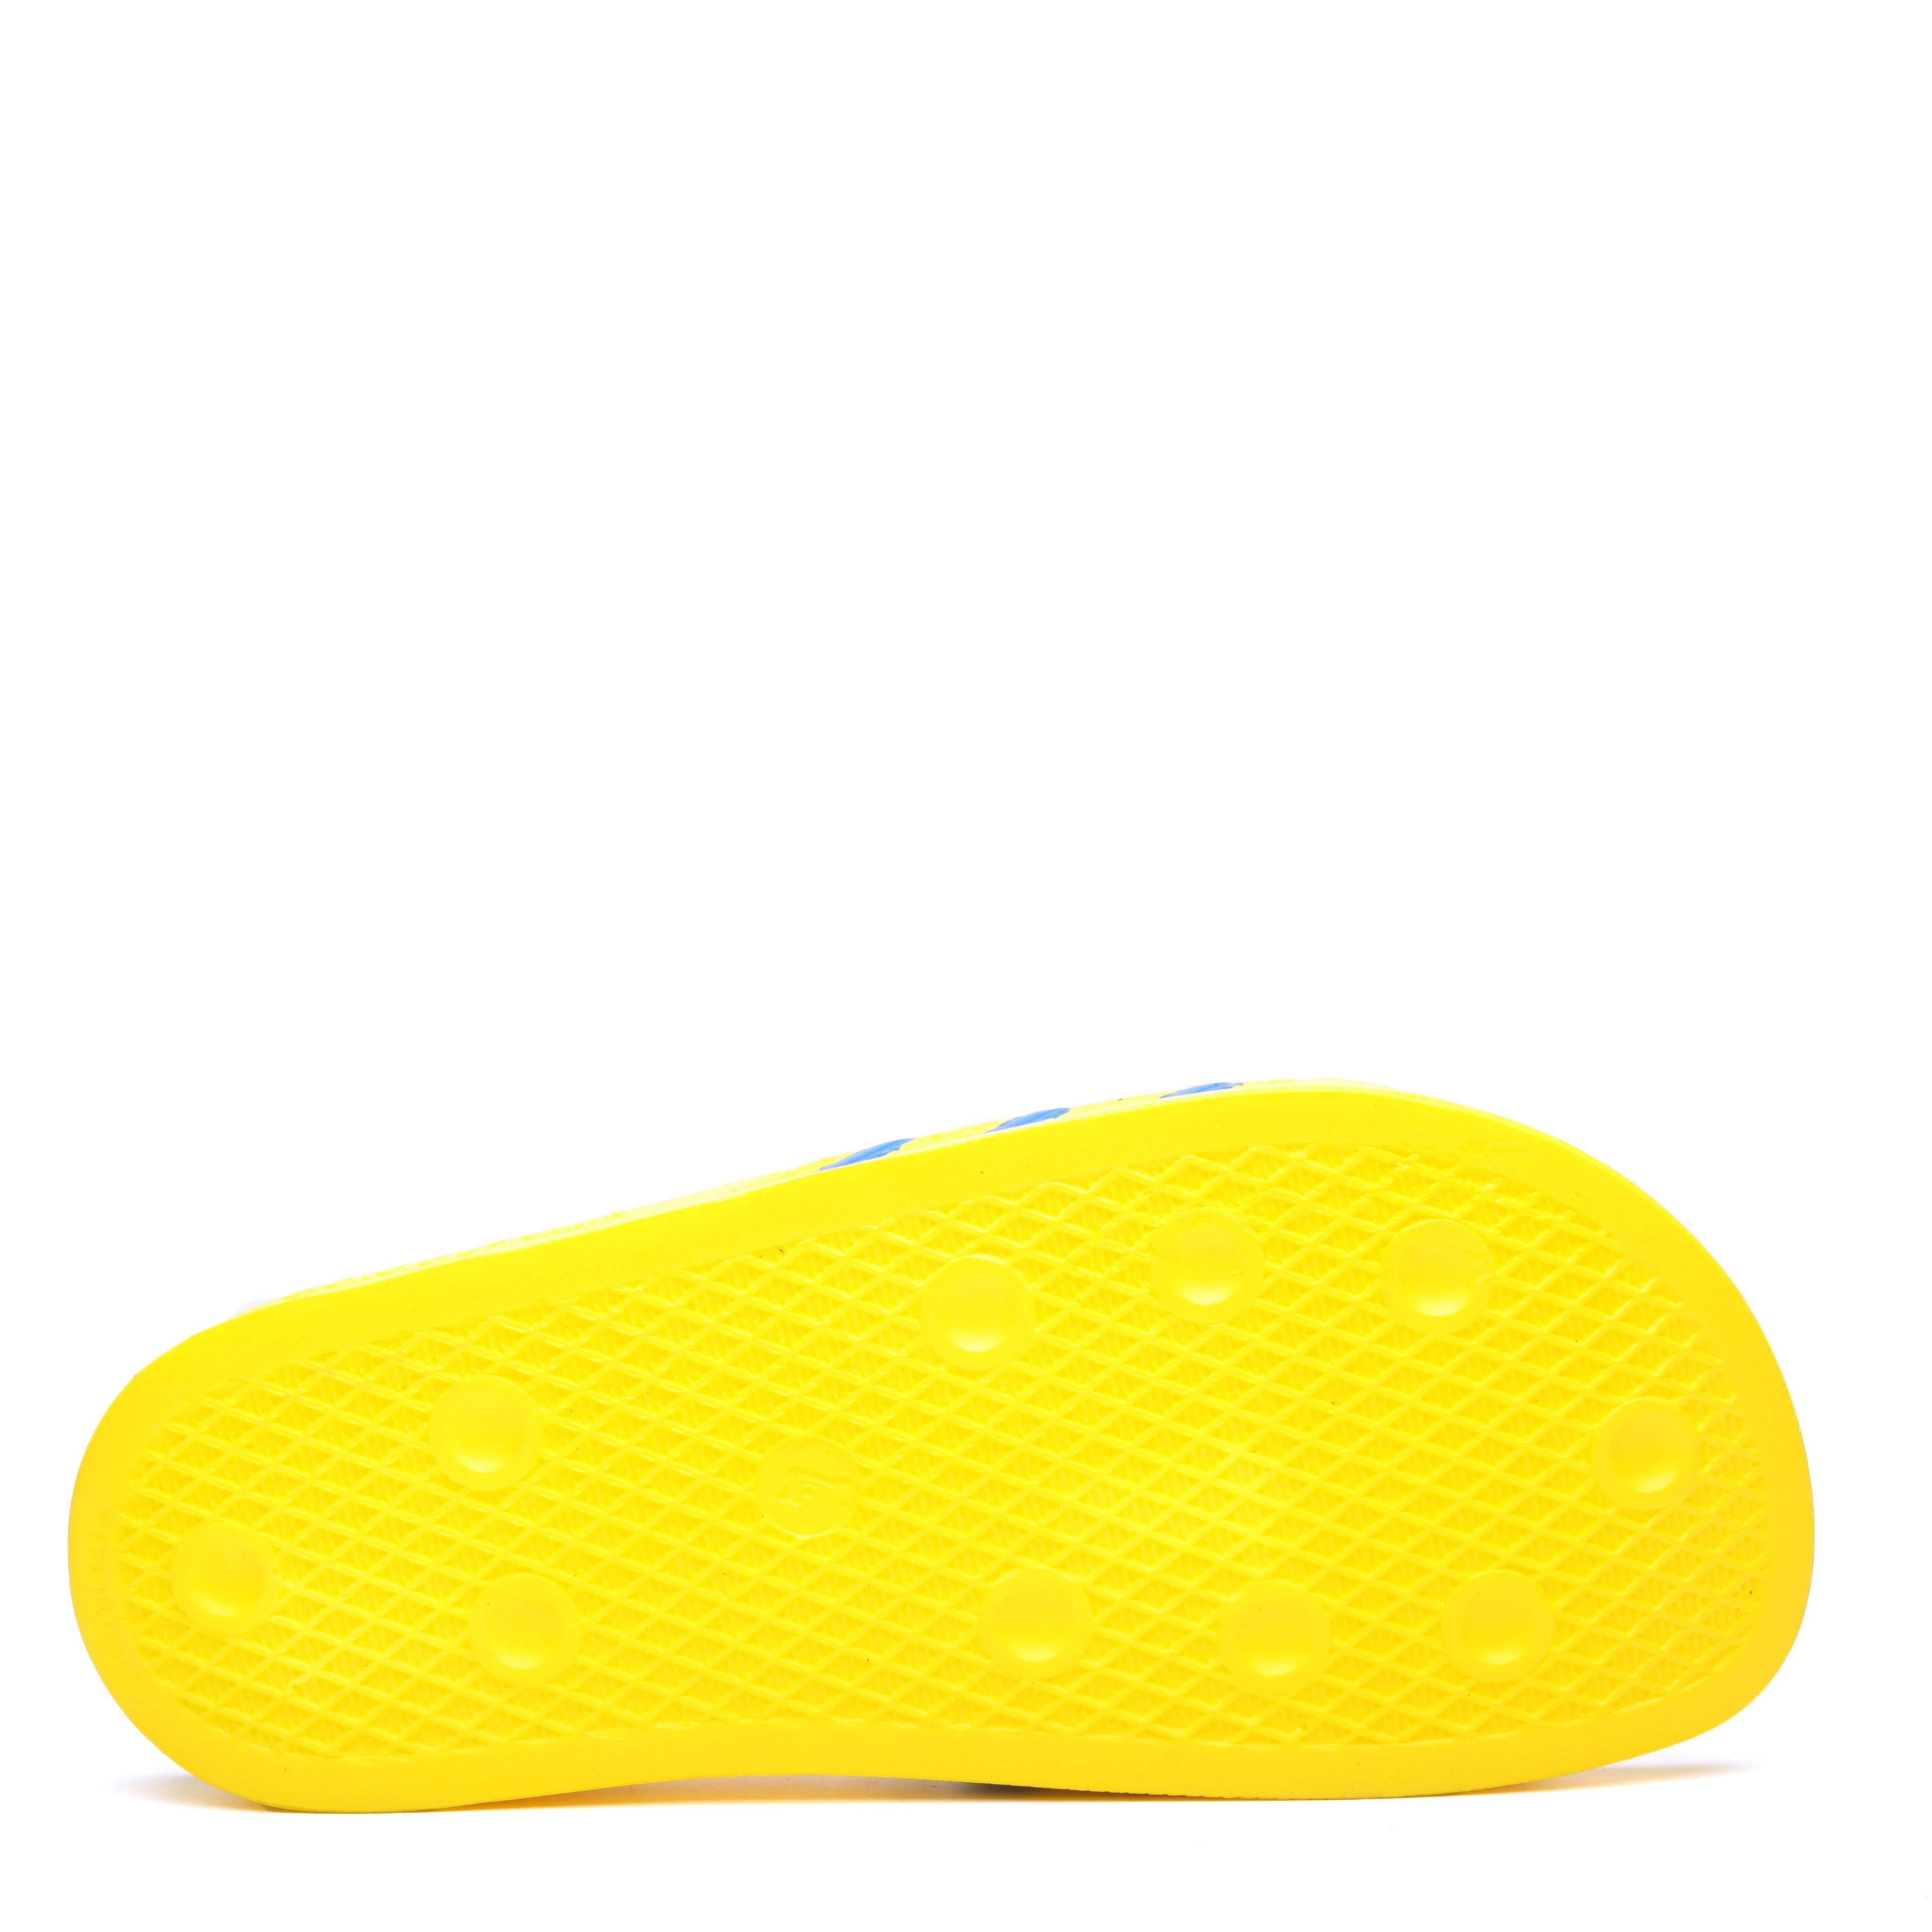  желтые сланцы adidas Adilette S78677 - цена, описание, фото 4